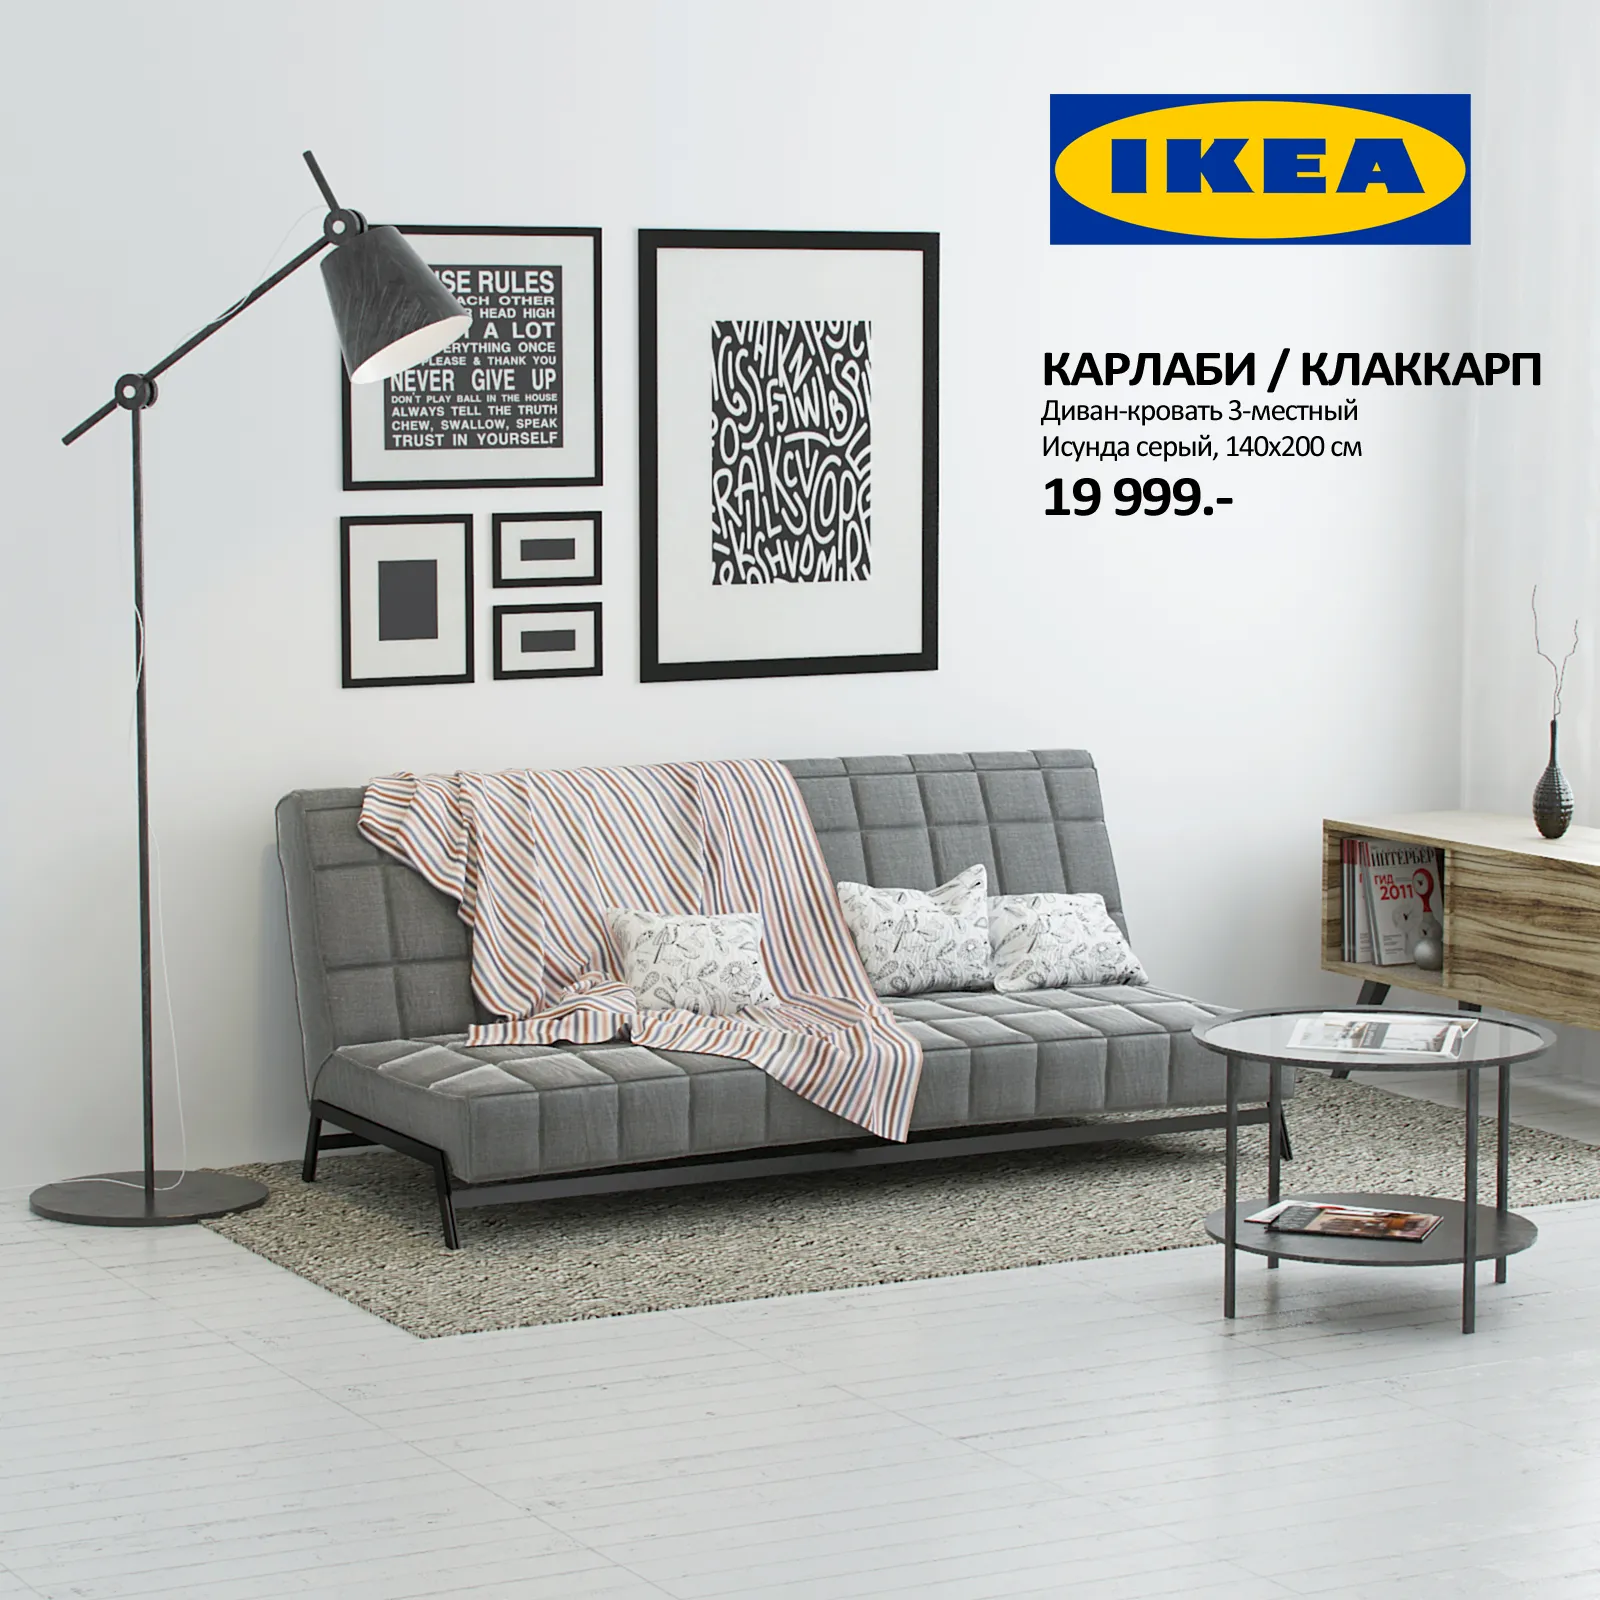 Sofa Bed IKEA Karlabi – Klakkarp – 225545